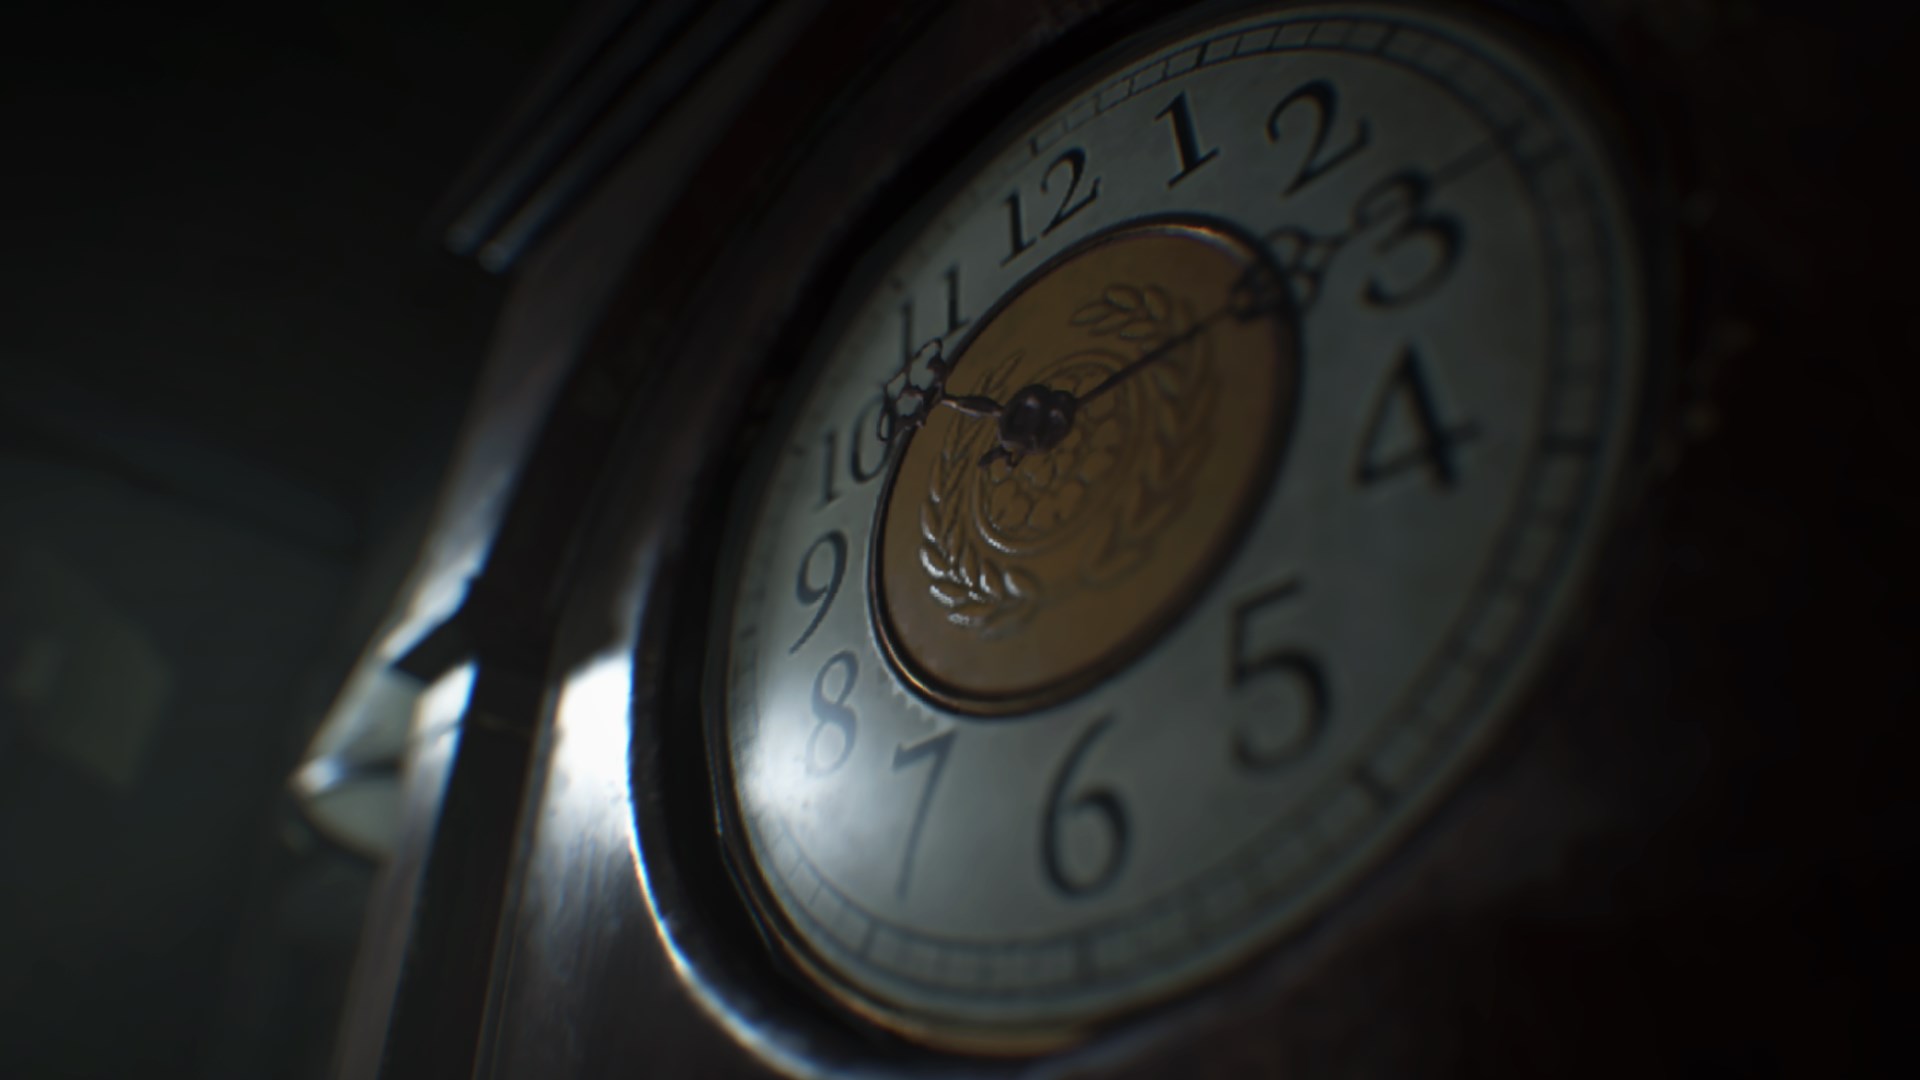 Resident evil 7 часы. Какое время поставить на часах в Resident Evil 7.